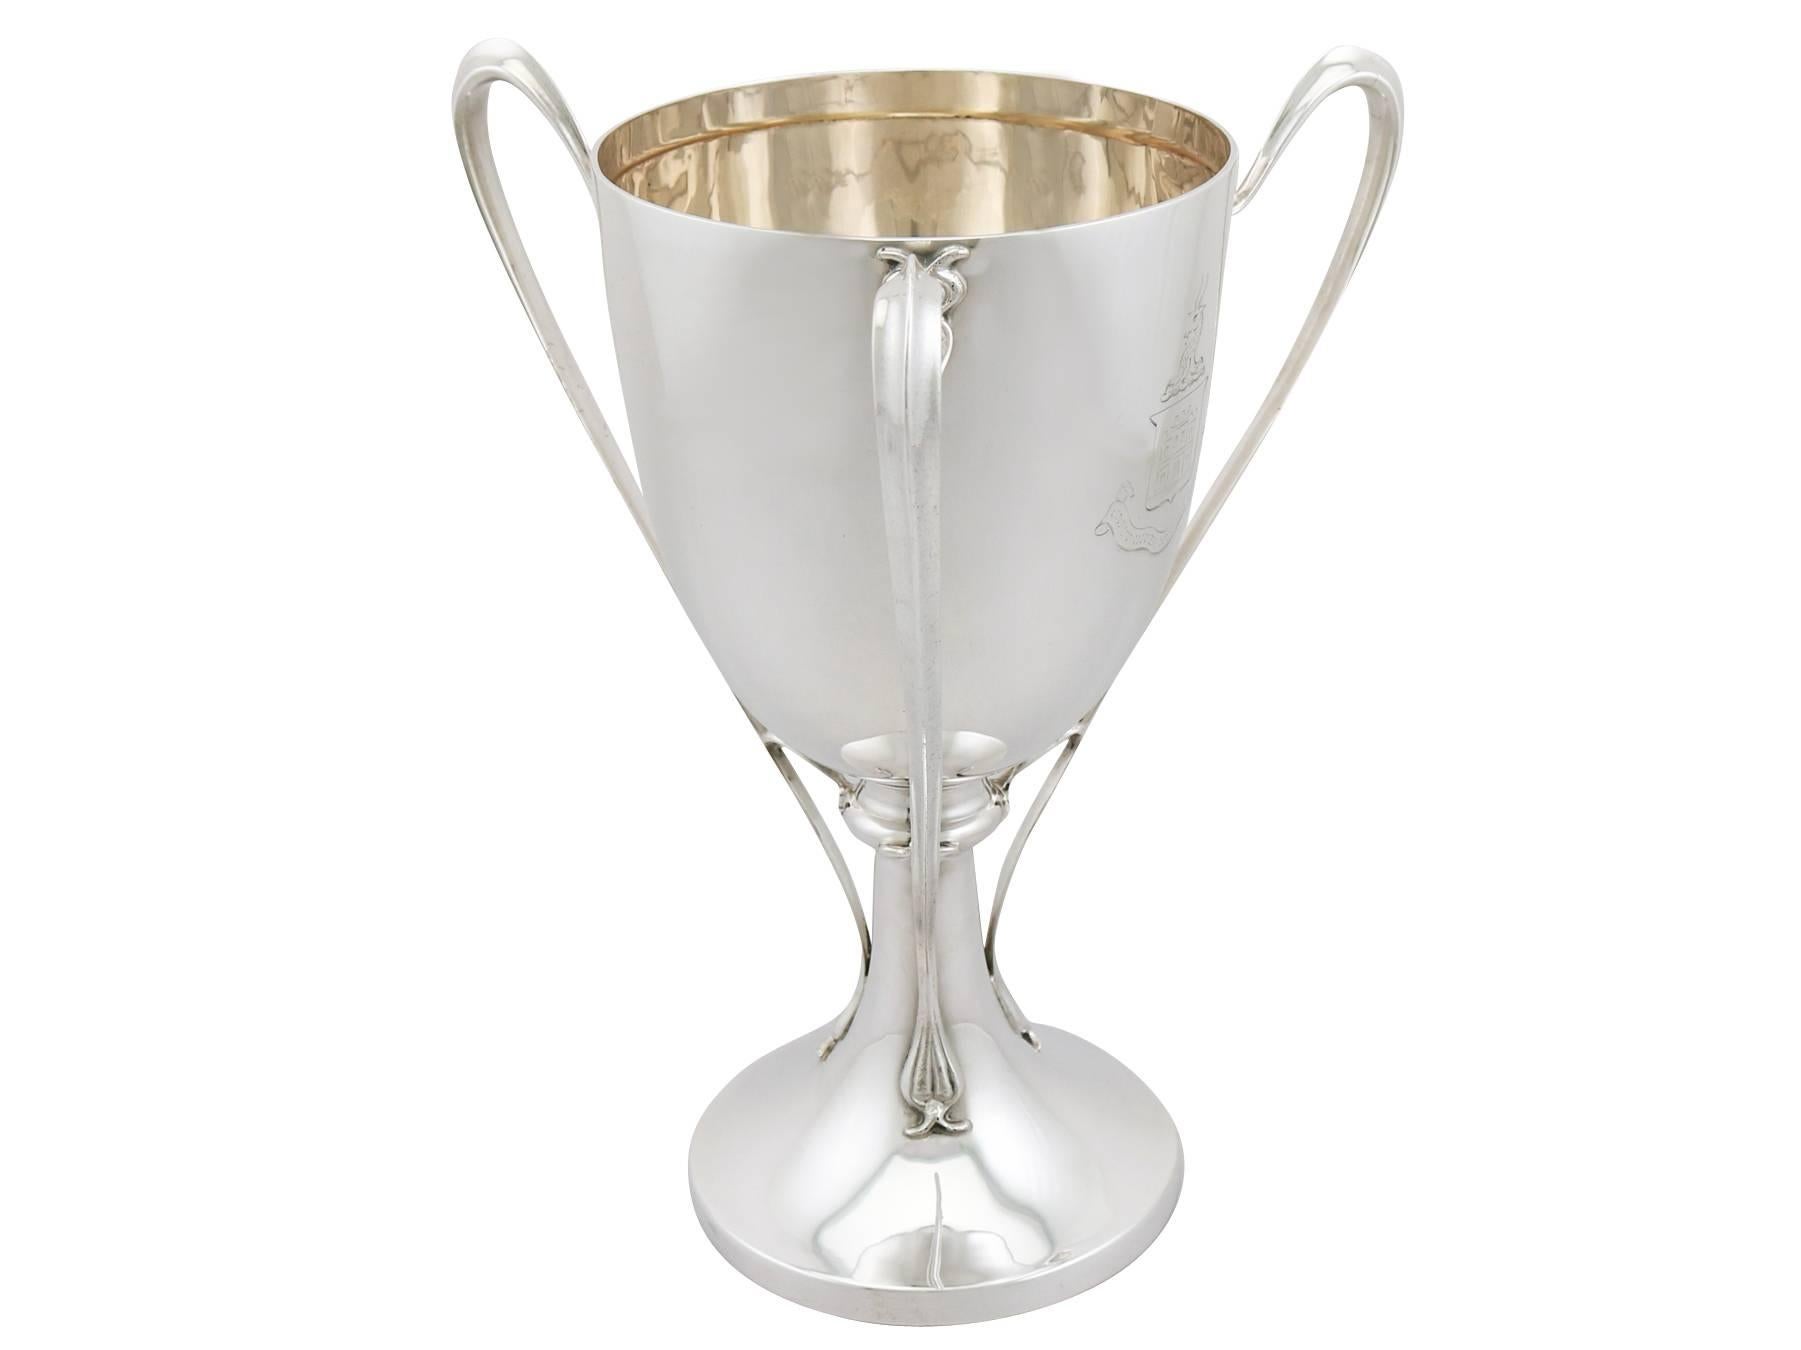 English Antique Edwardian Art Nouveau Style Sterling Silver Presentation Cup